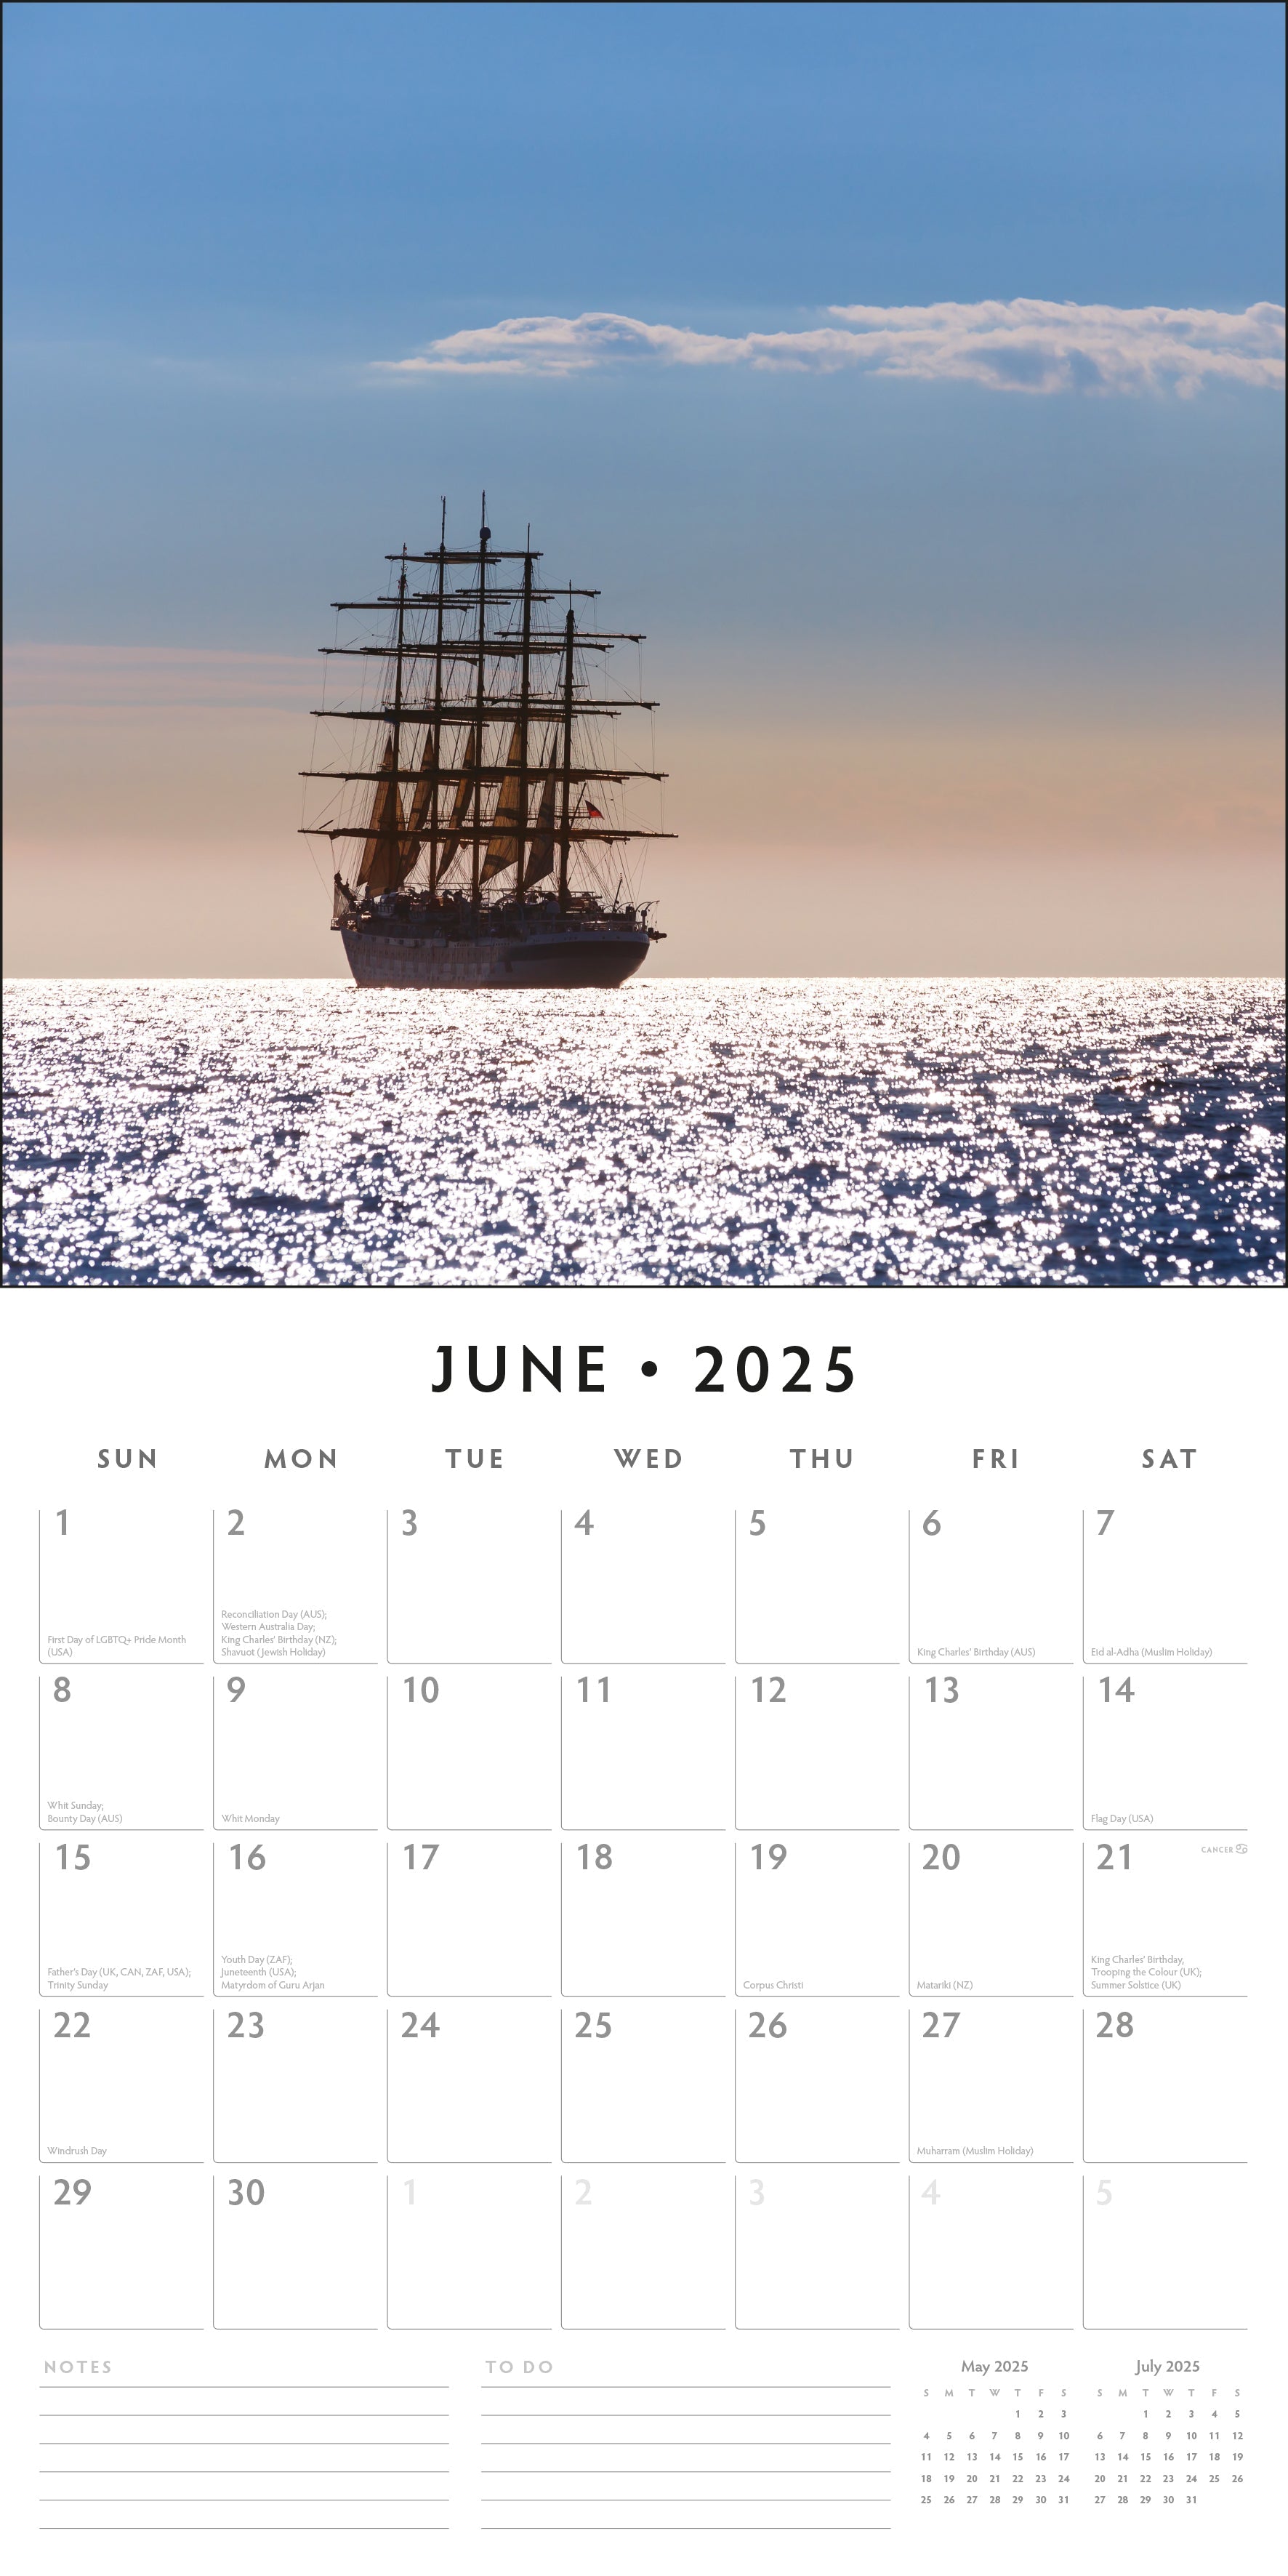 2025 Tall Ships - Square Wall Calendar